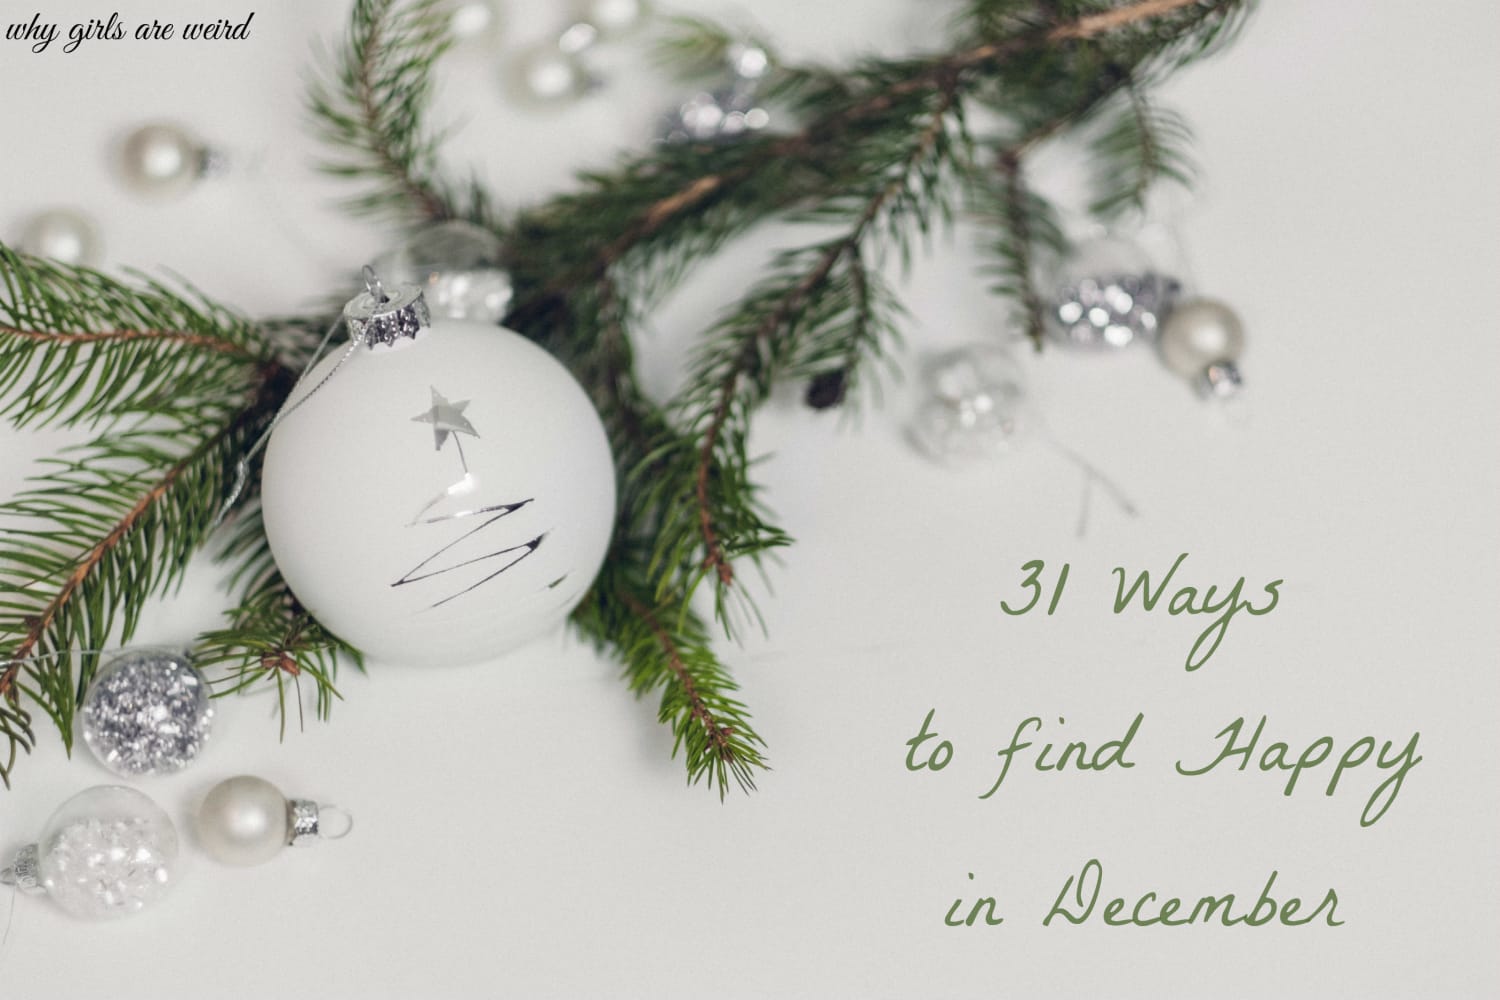 31 Ways to find Happy in December